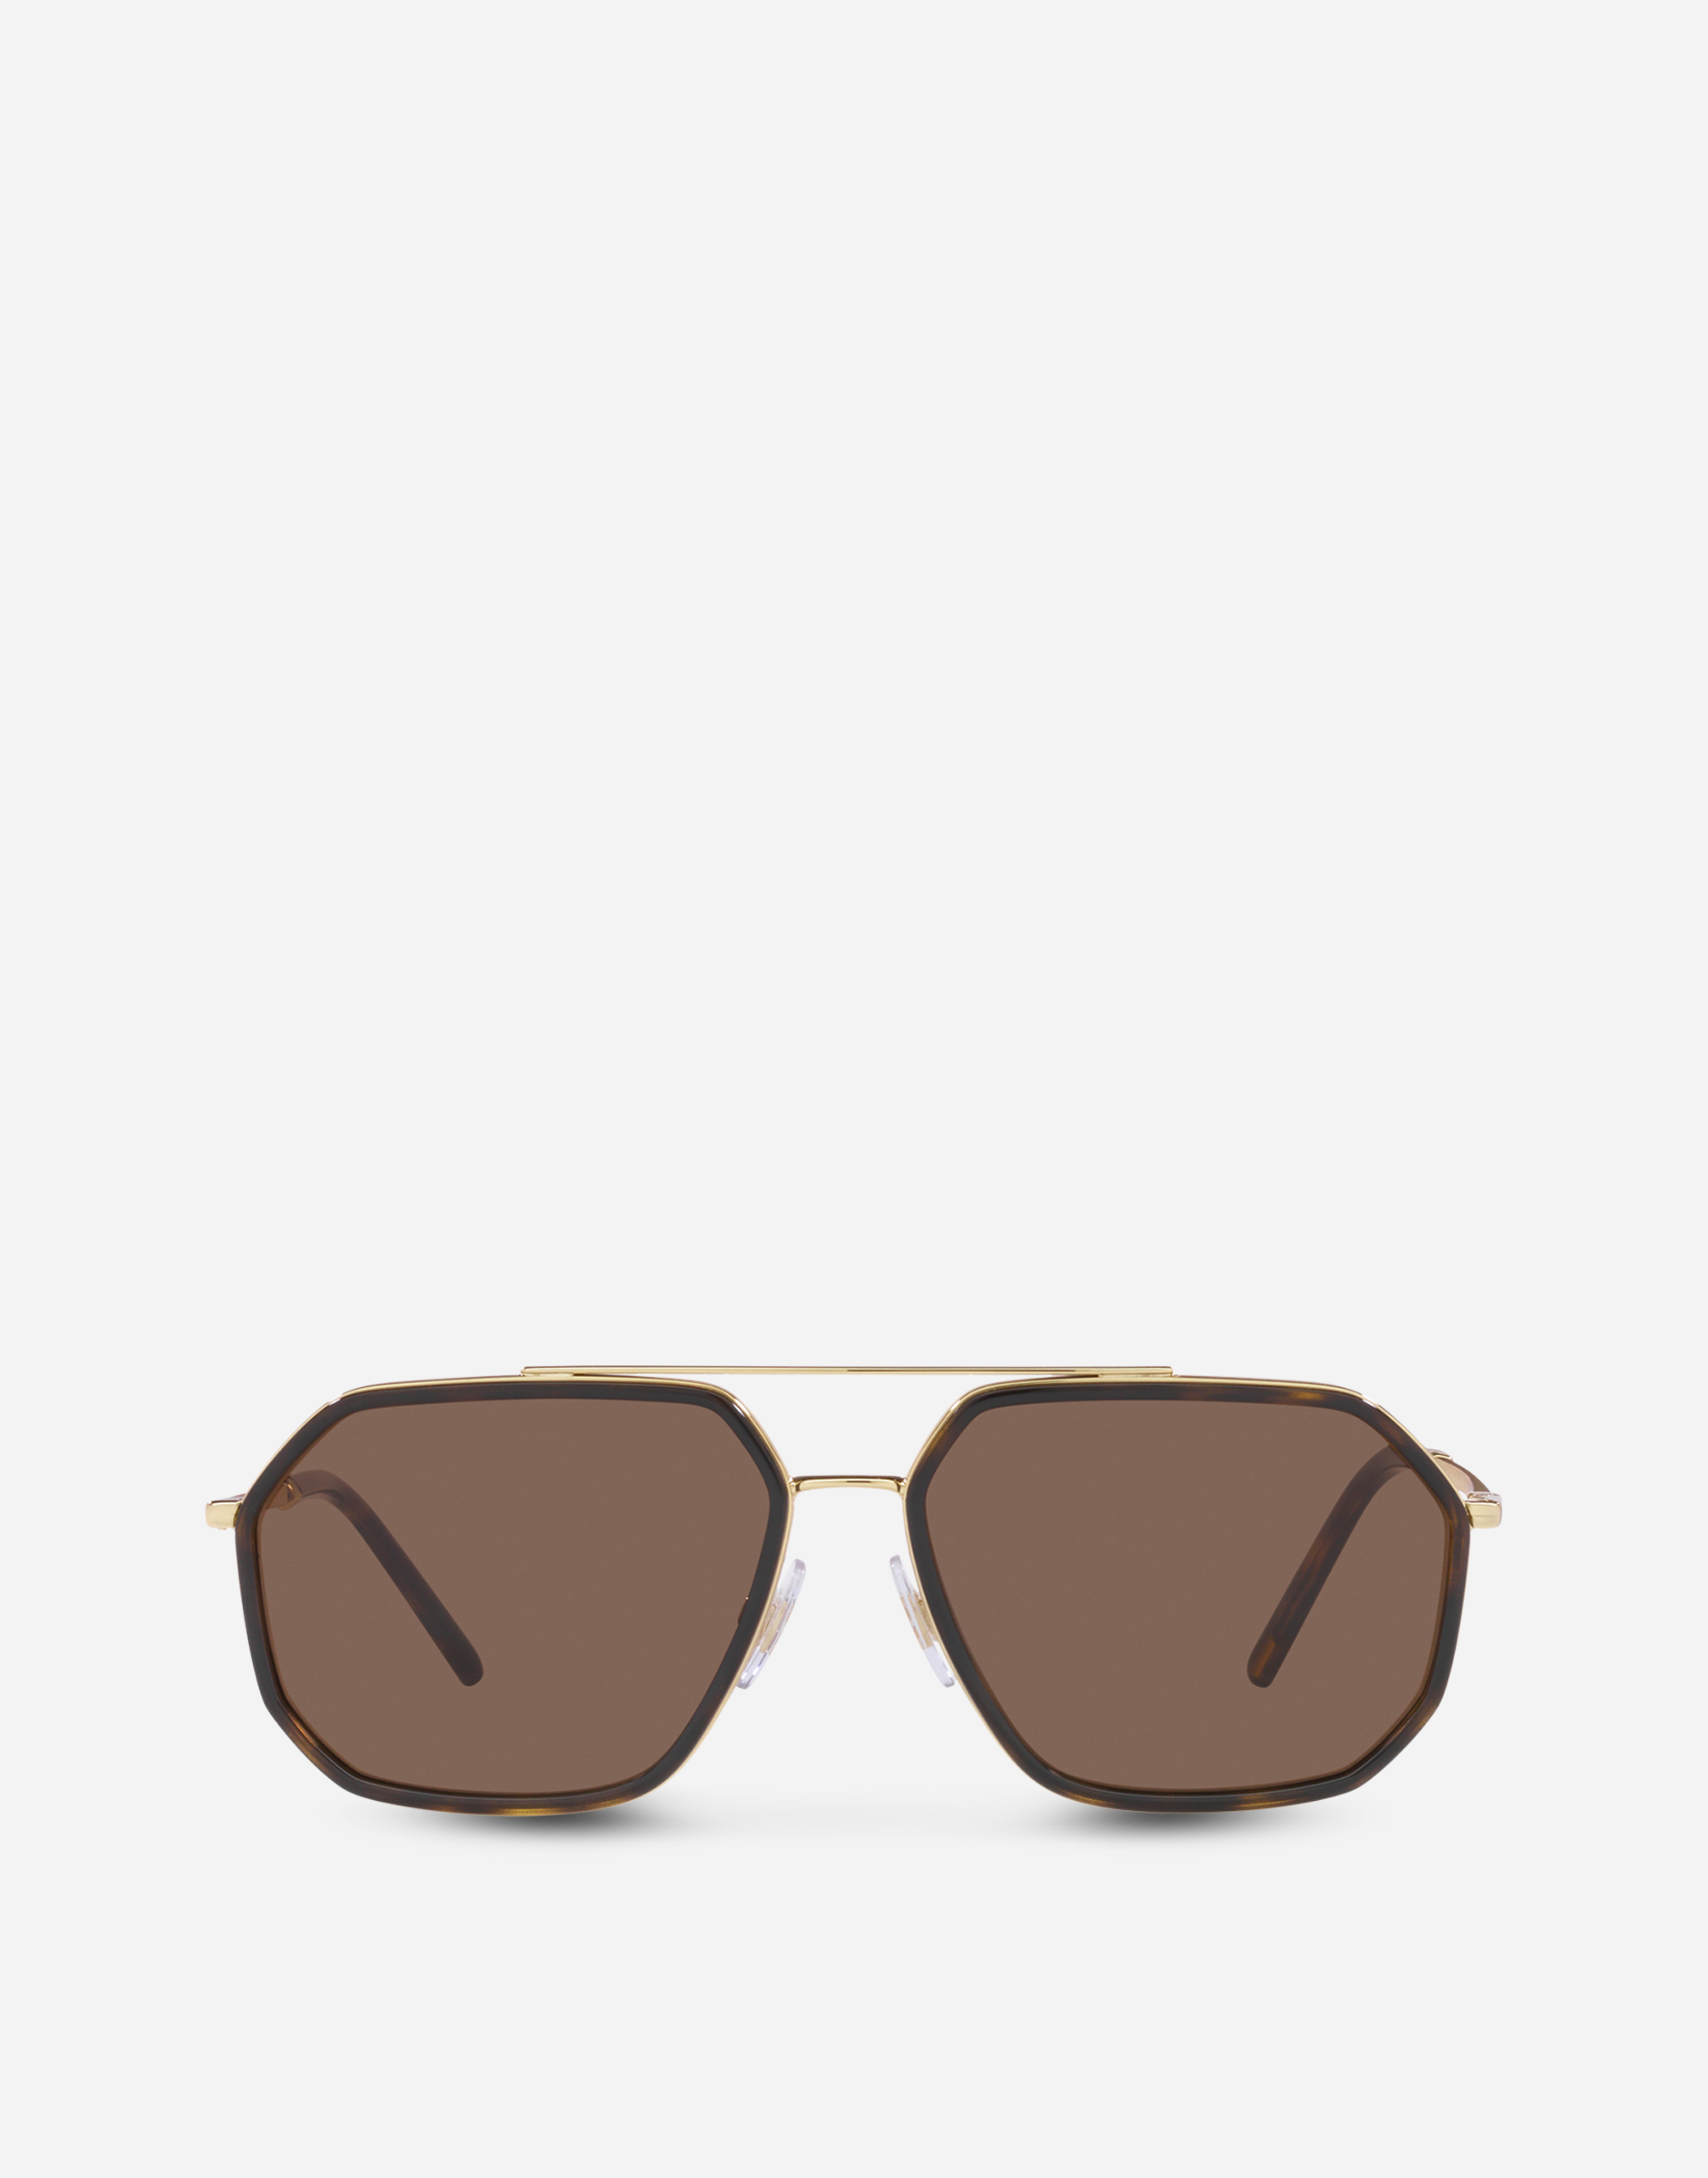 Gros grain sunglasses in Gold and havana